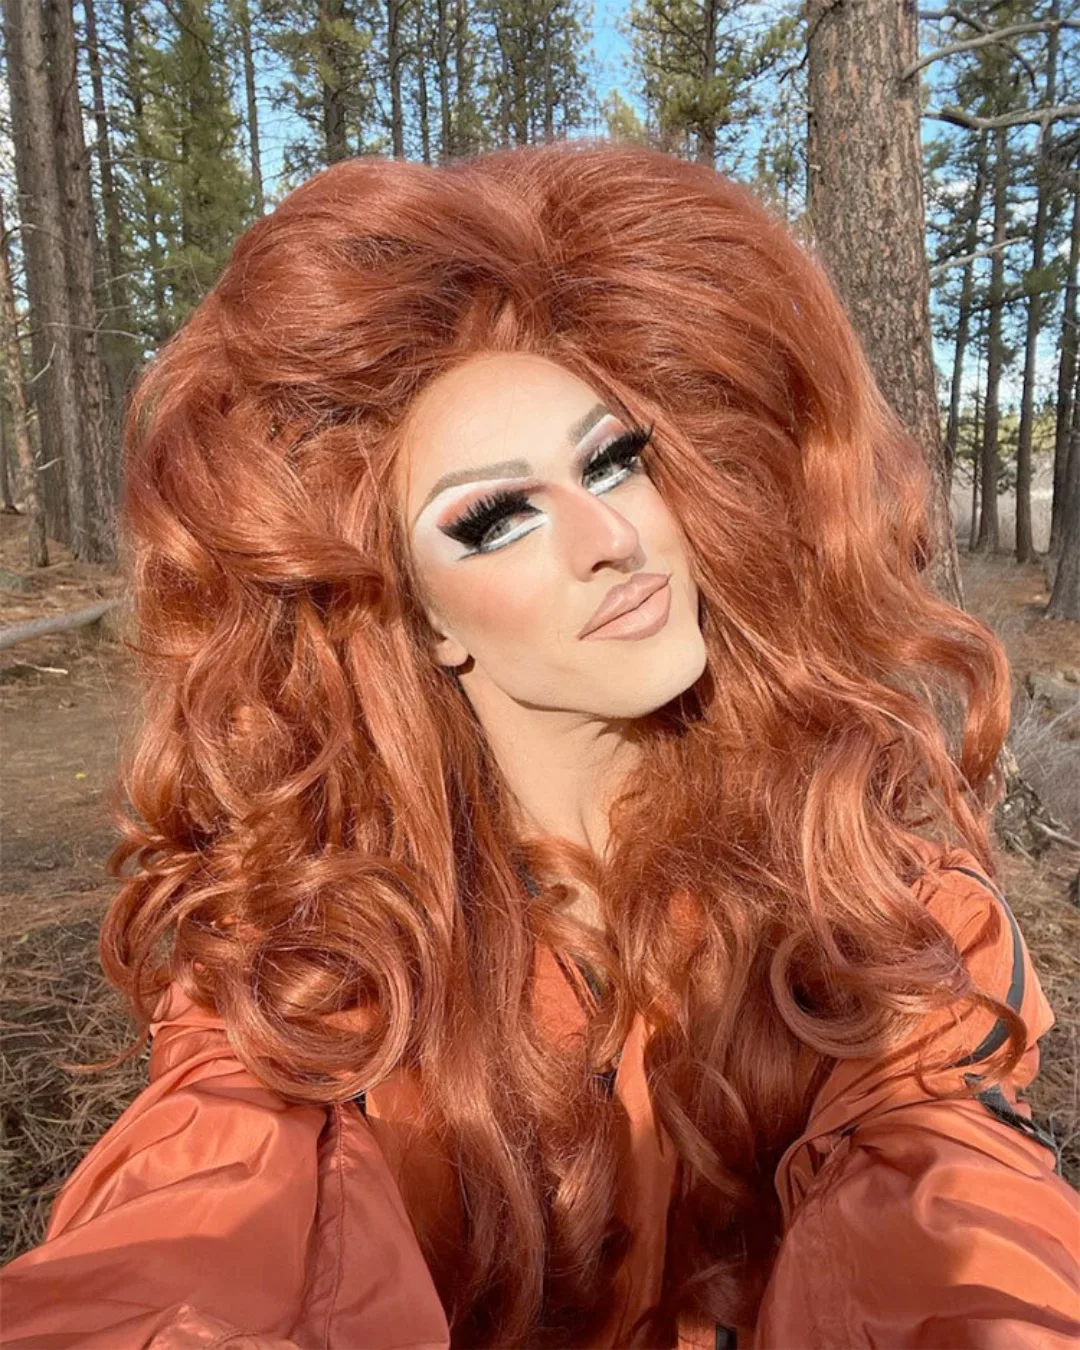 Pattie Gonia drag queen activist in the forest